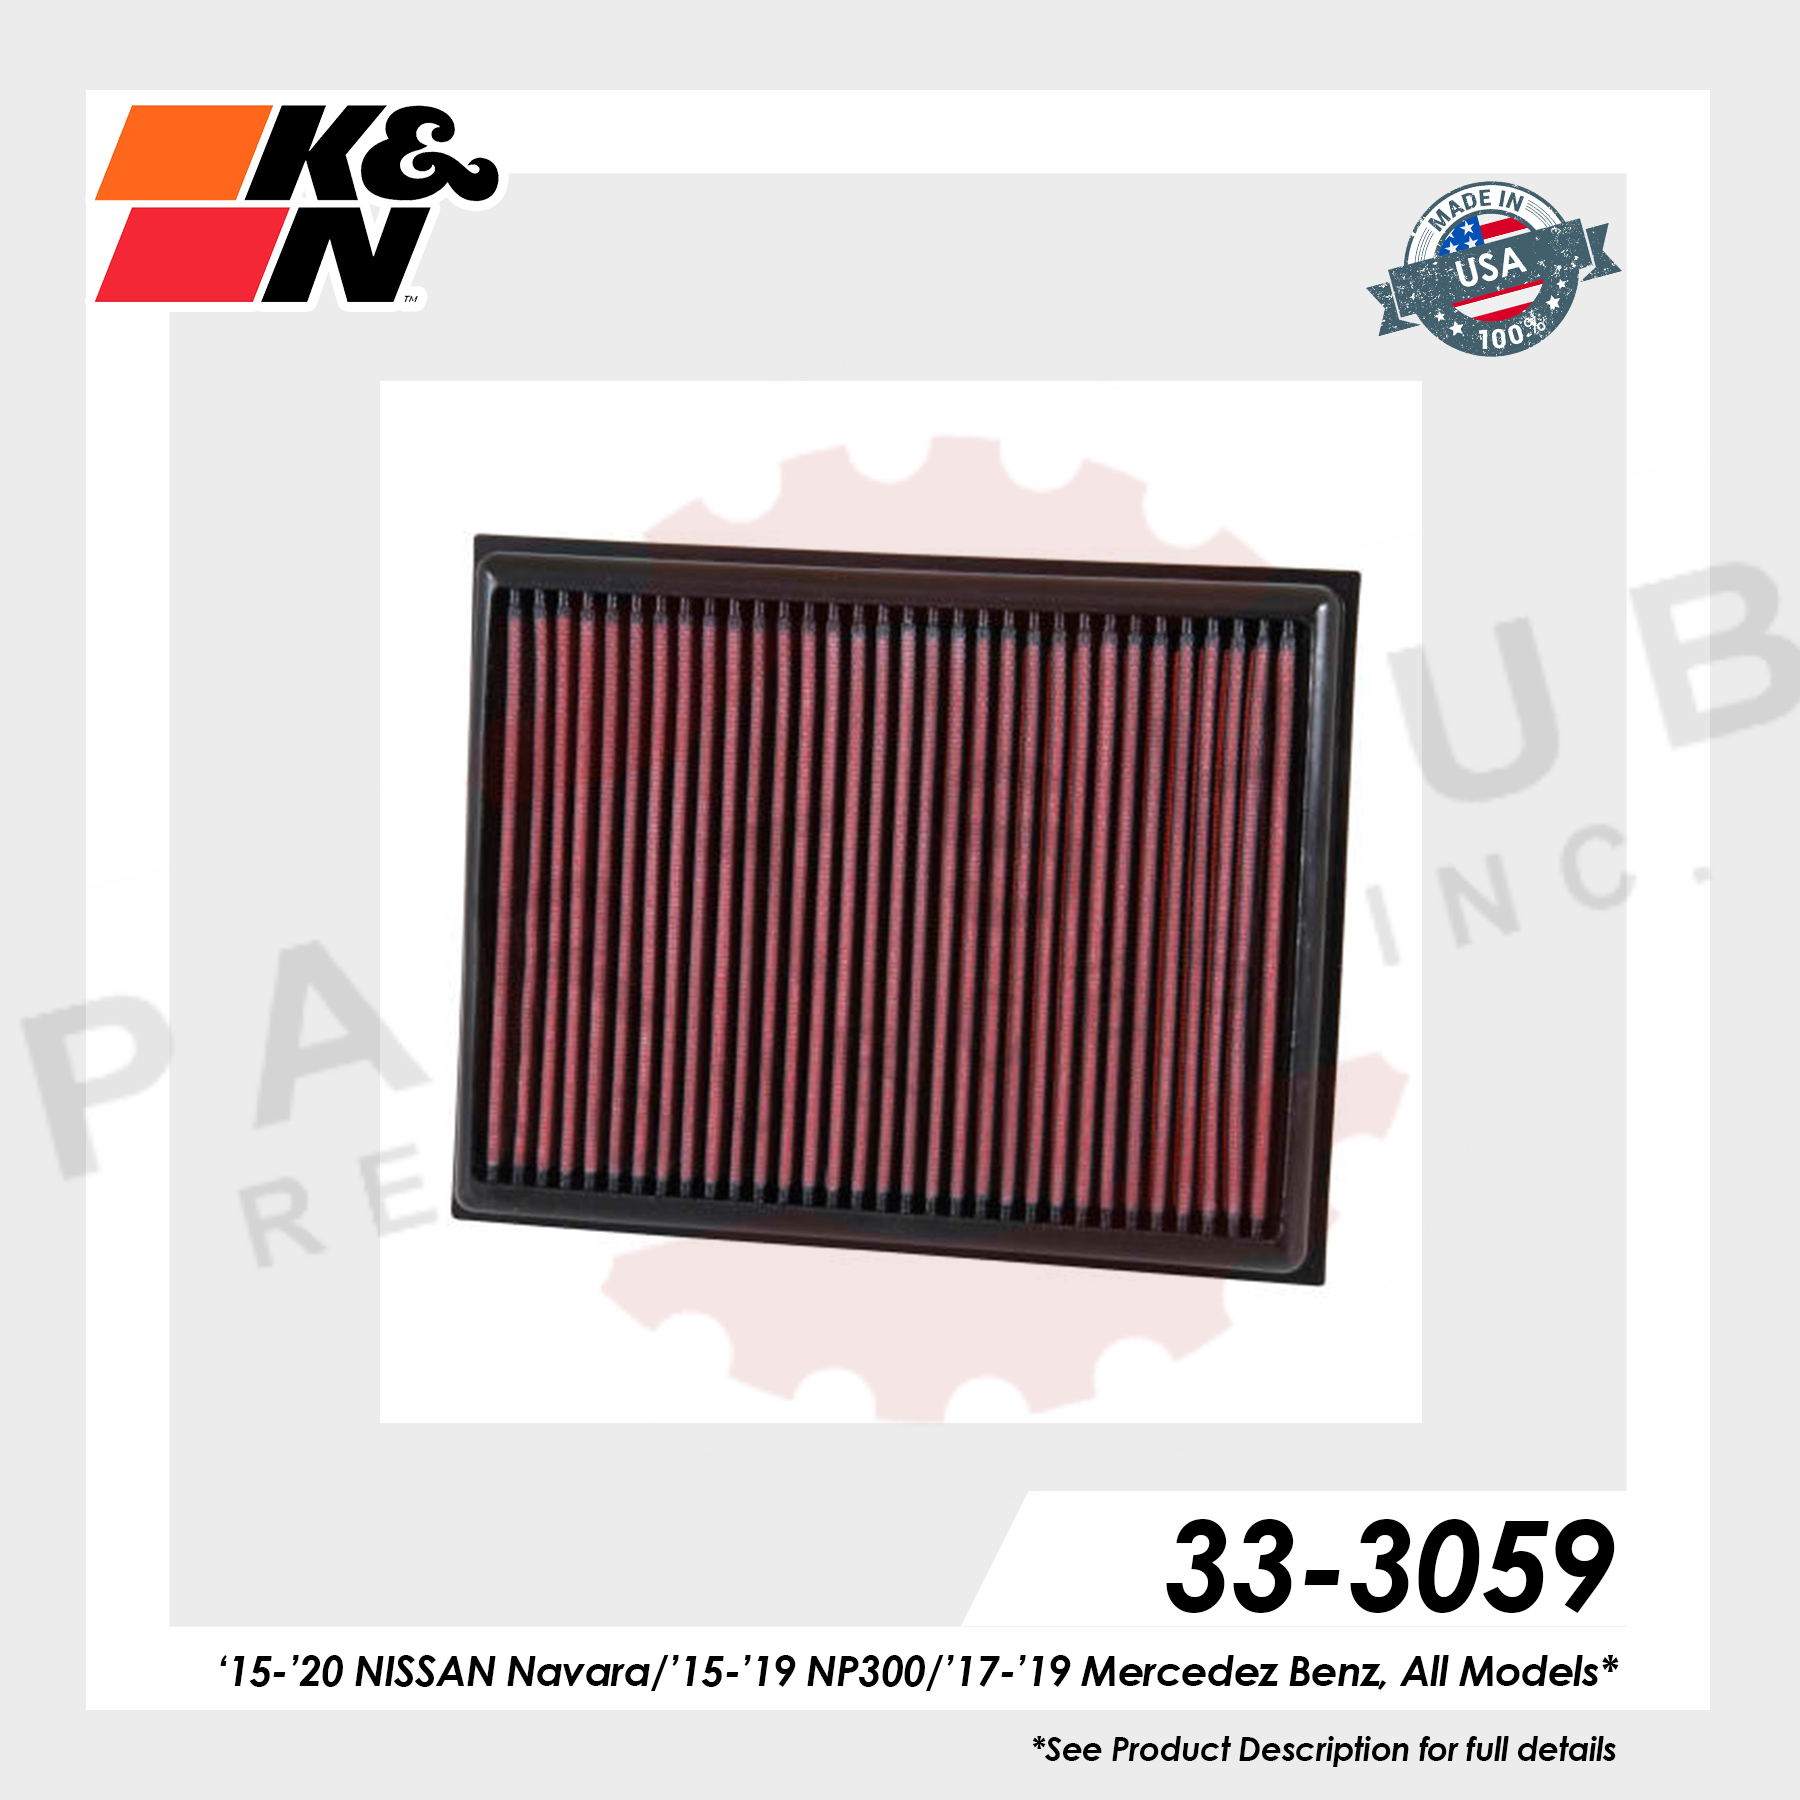 K&N 33-3059 High Performance OE Style Filter For 15-17 Nissan Navara/Np300 